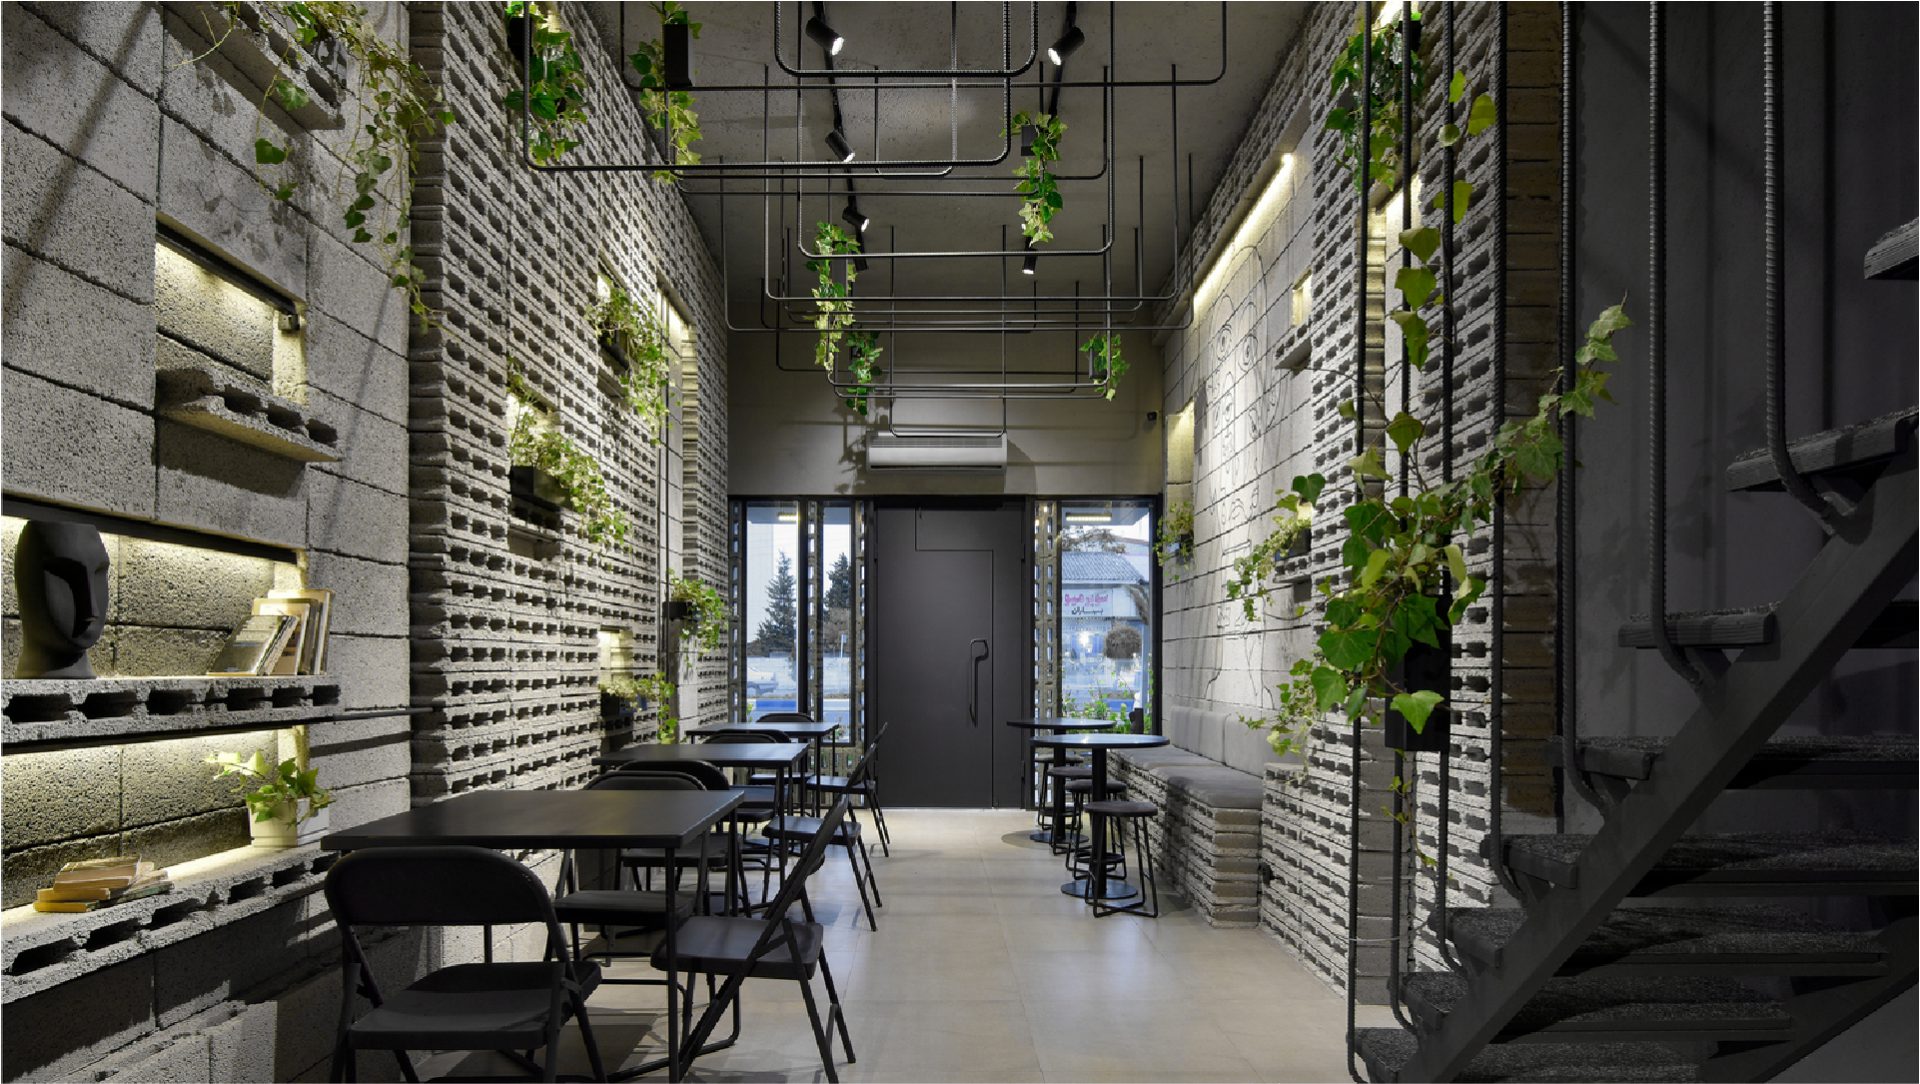 Ivy Café by Iranian architect Neda Mirani   DesignWanted ...